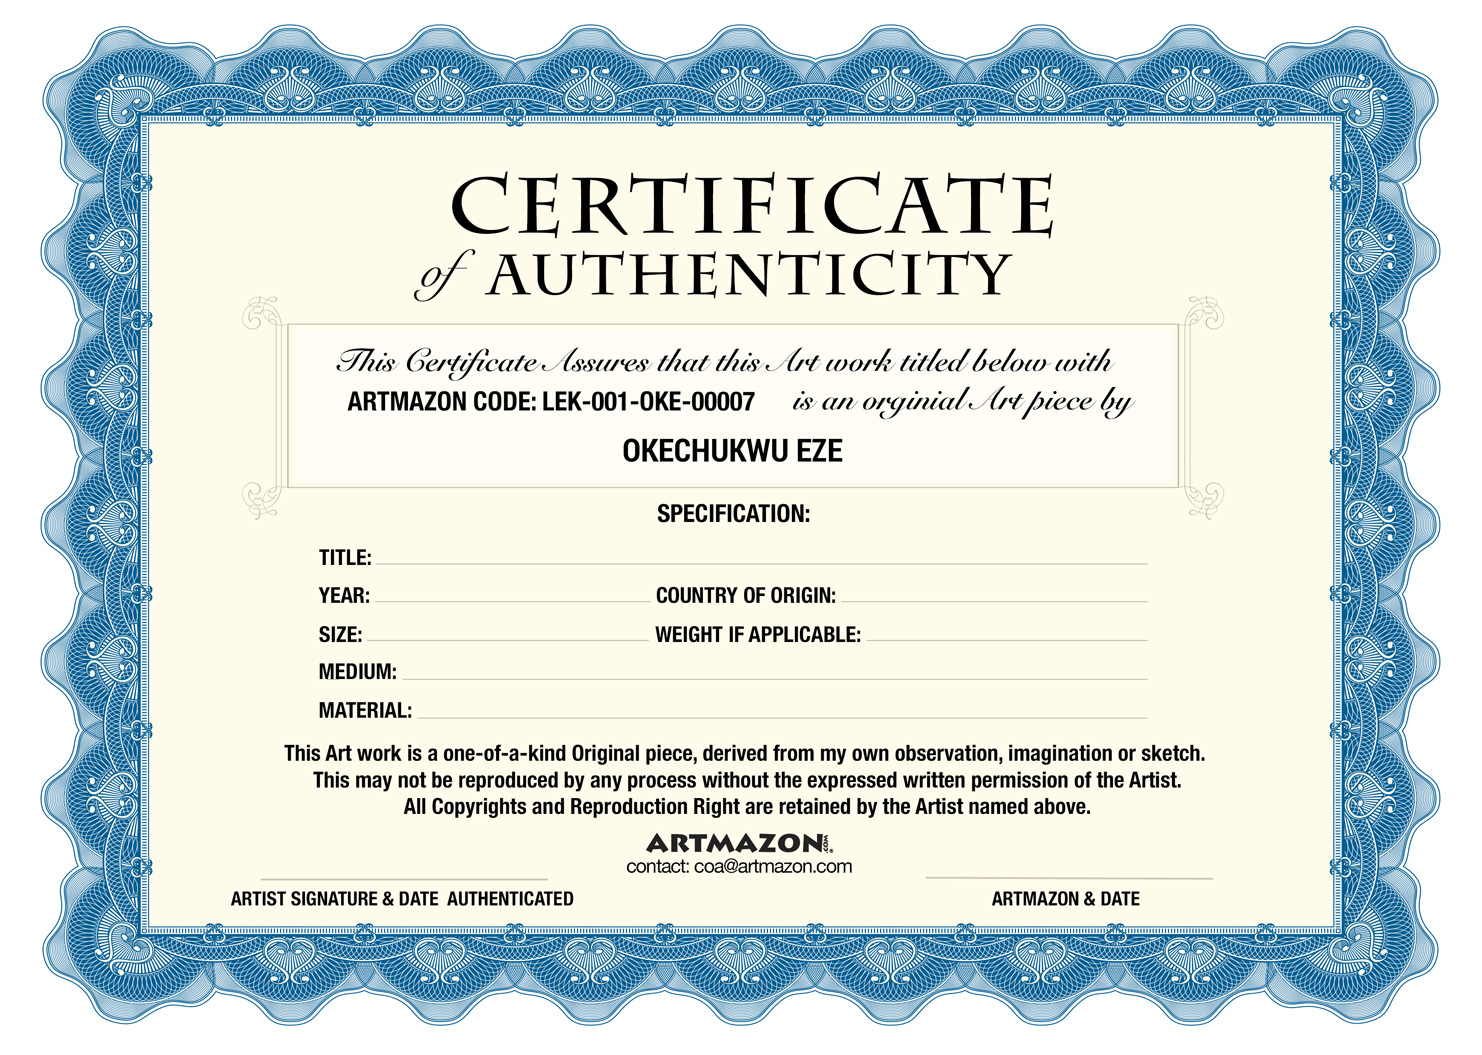 COA (Certificate of Authenticity)